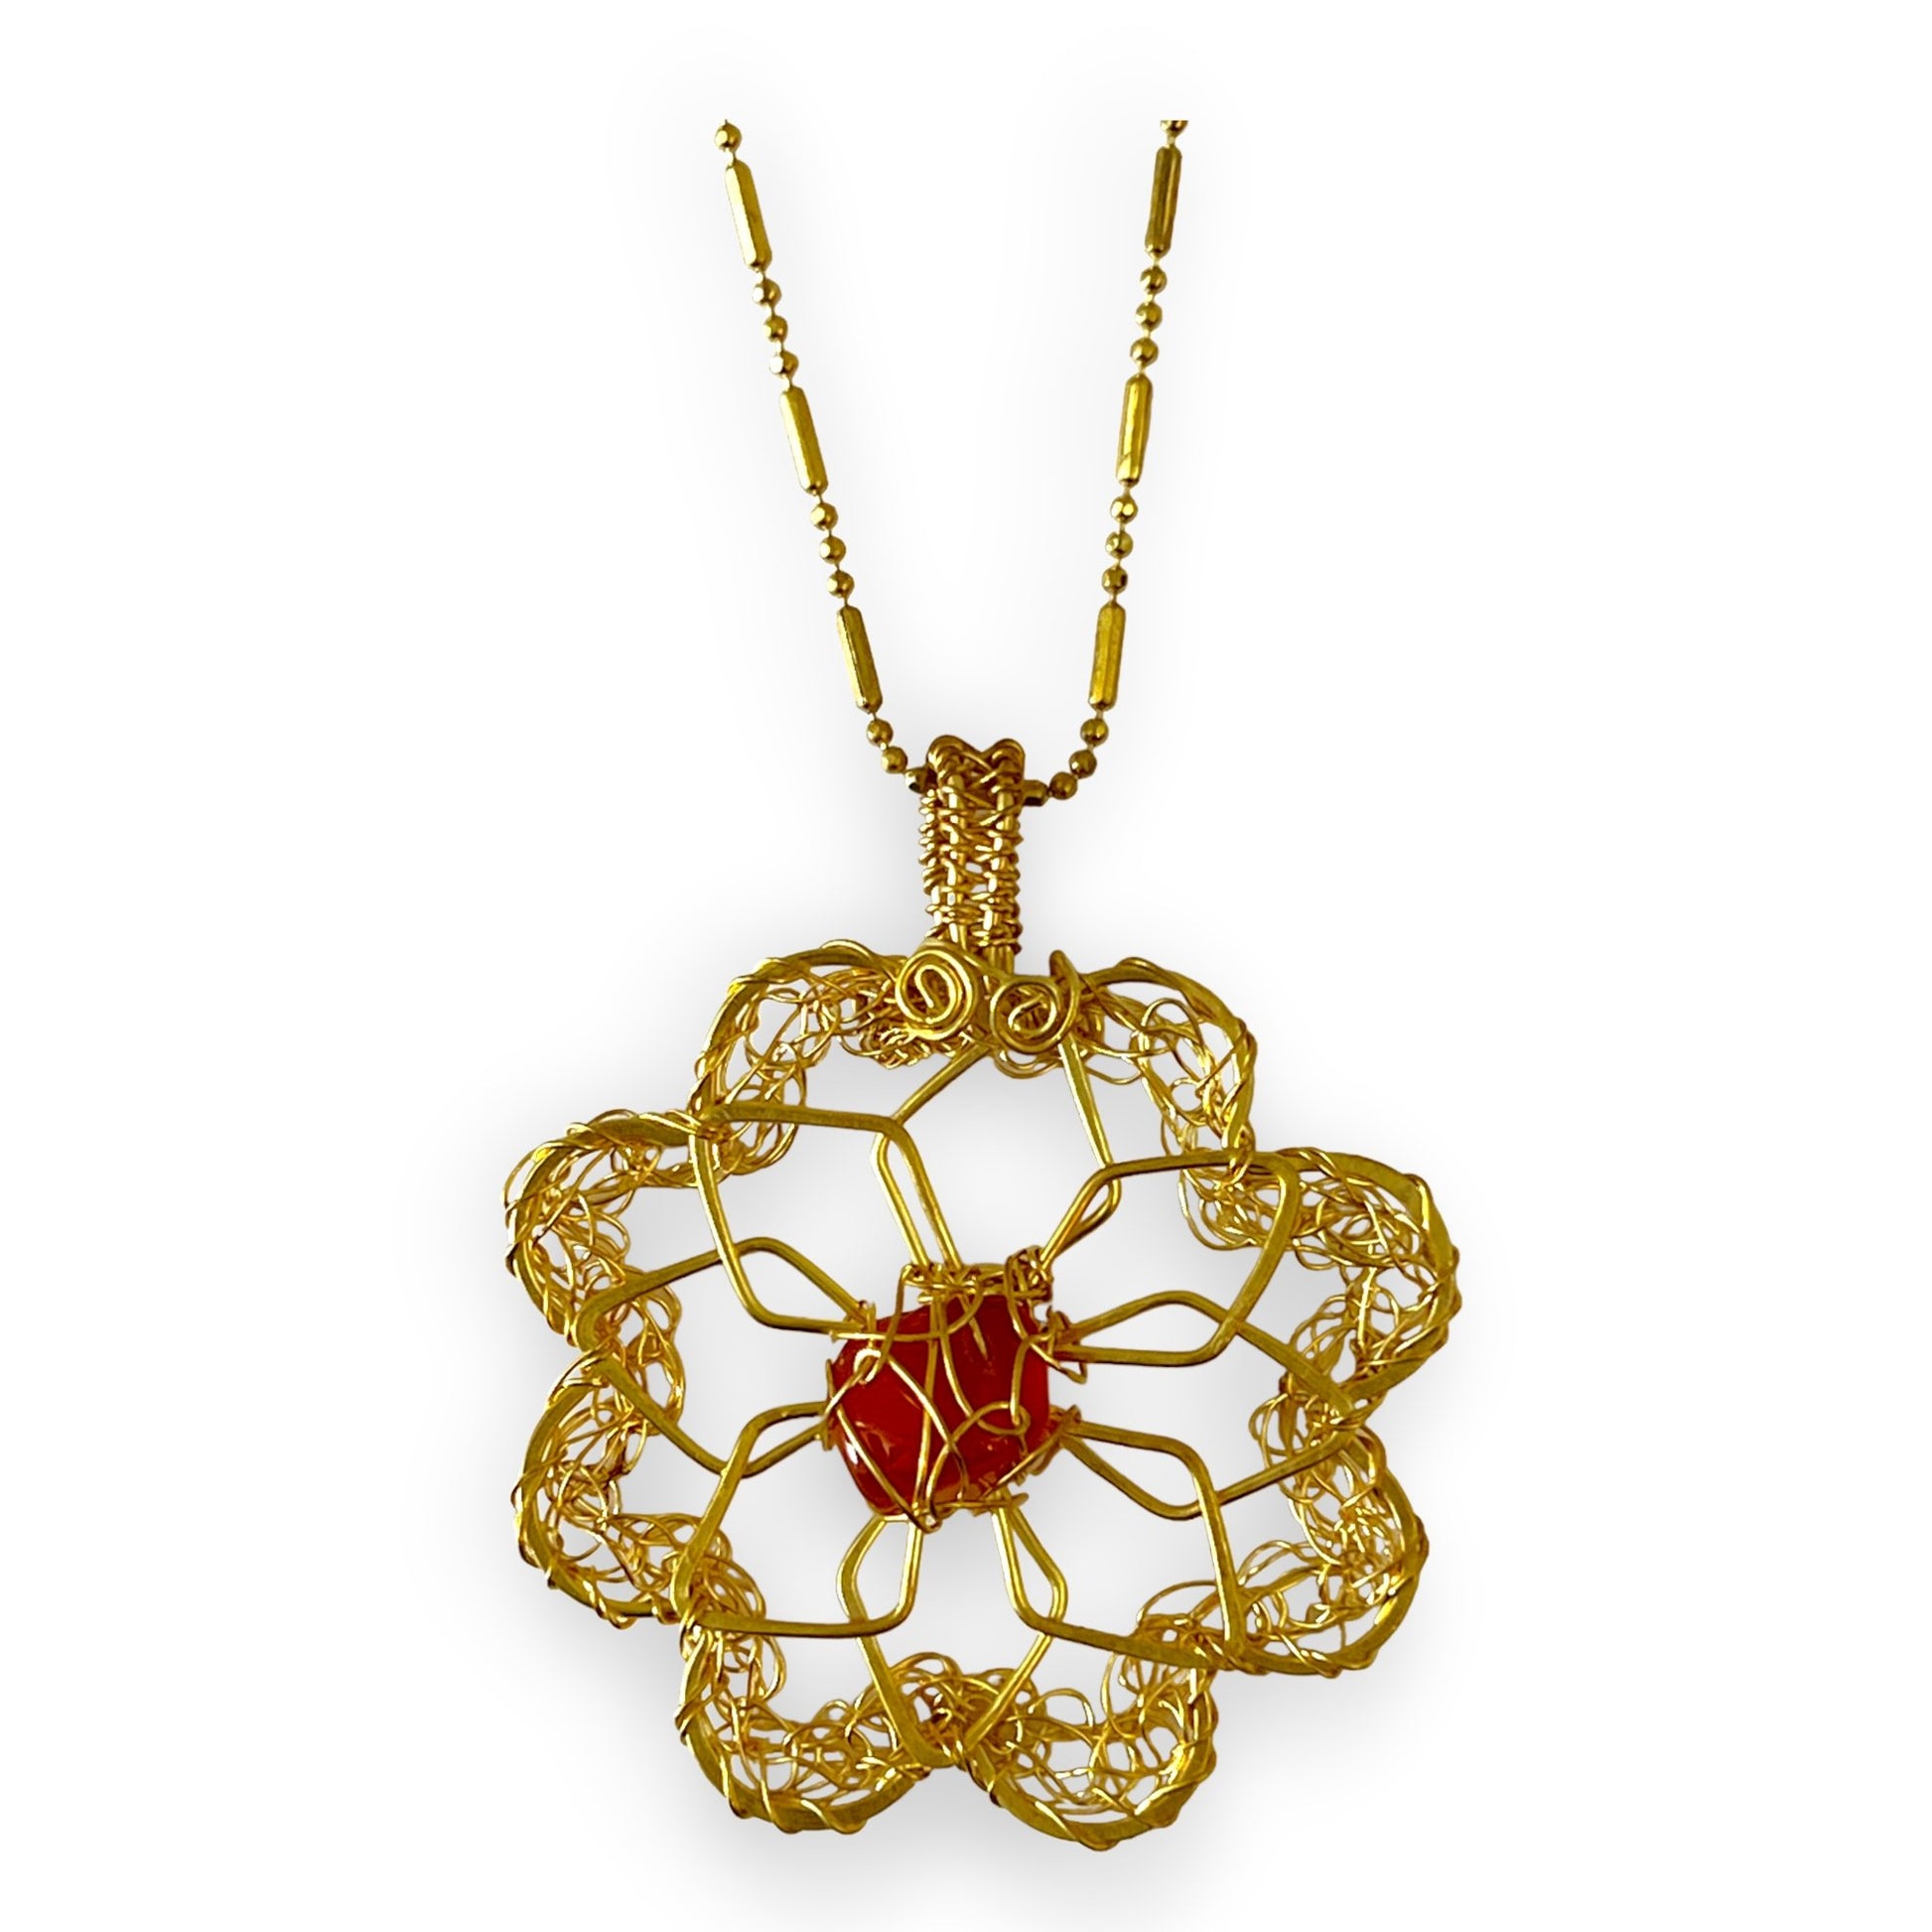 Lacy petal floral inspired gemstone pendant necklace - Sundara Joon